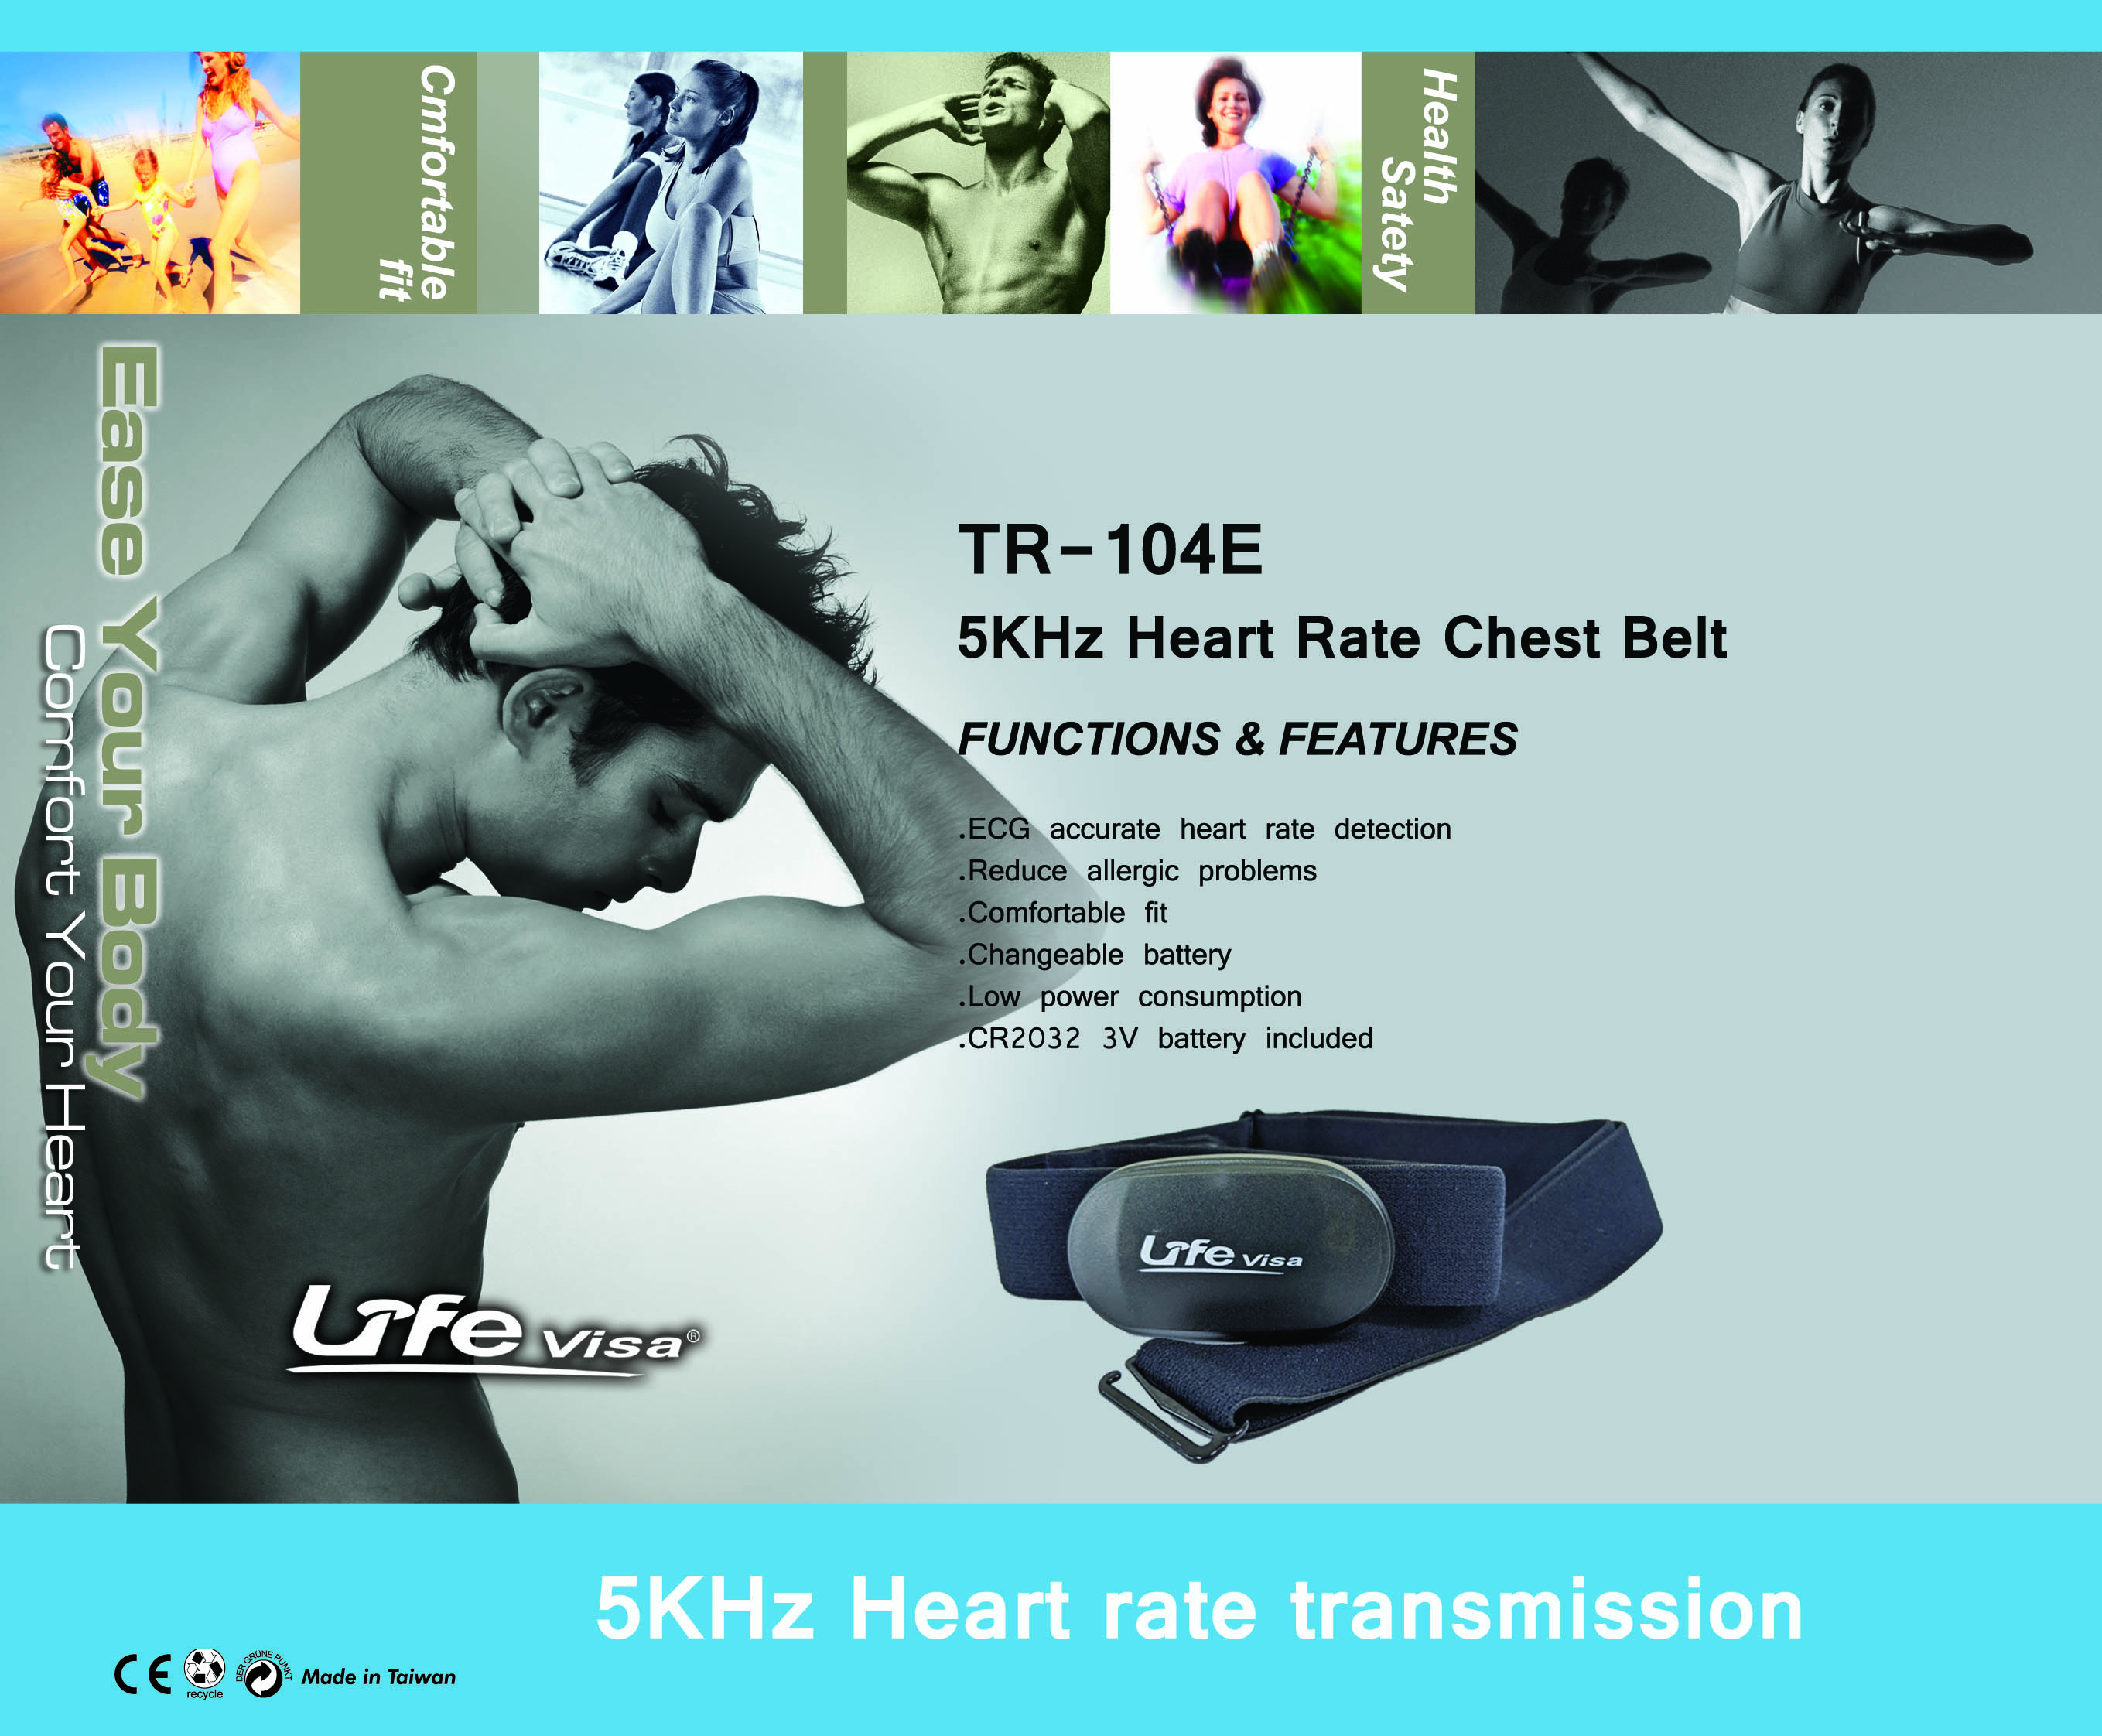 5.3KHz Heart rate chest belt,5KHz Heart rate monitor,heart rate monitor,5khz heart rate strap, heart rate monitor,,3 in 1 heart rate,three mode heart rate monitor,Lifevisa,lifevisa,Taiwan Biotronic